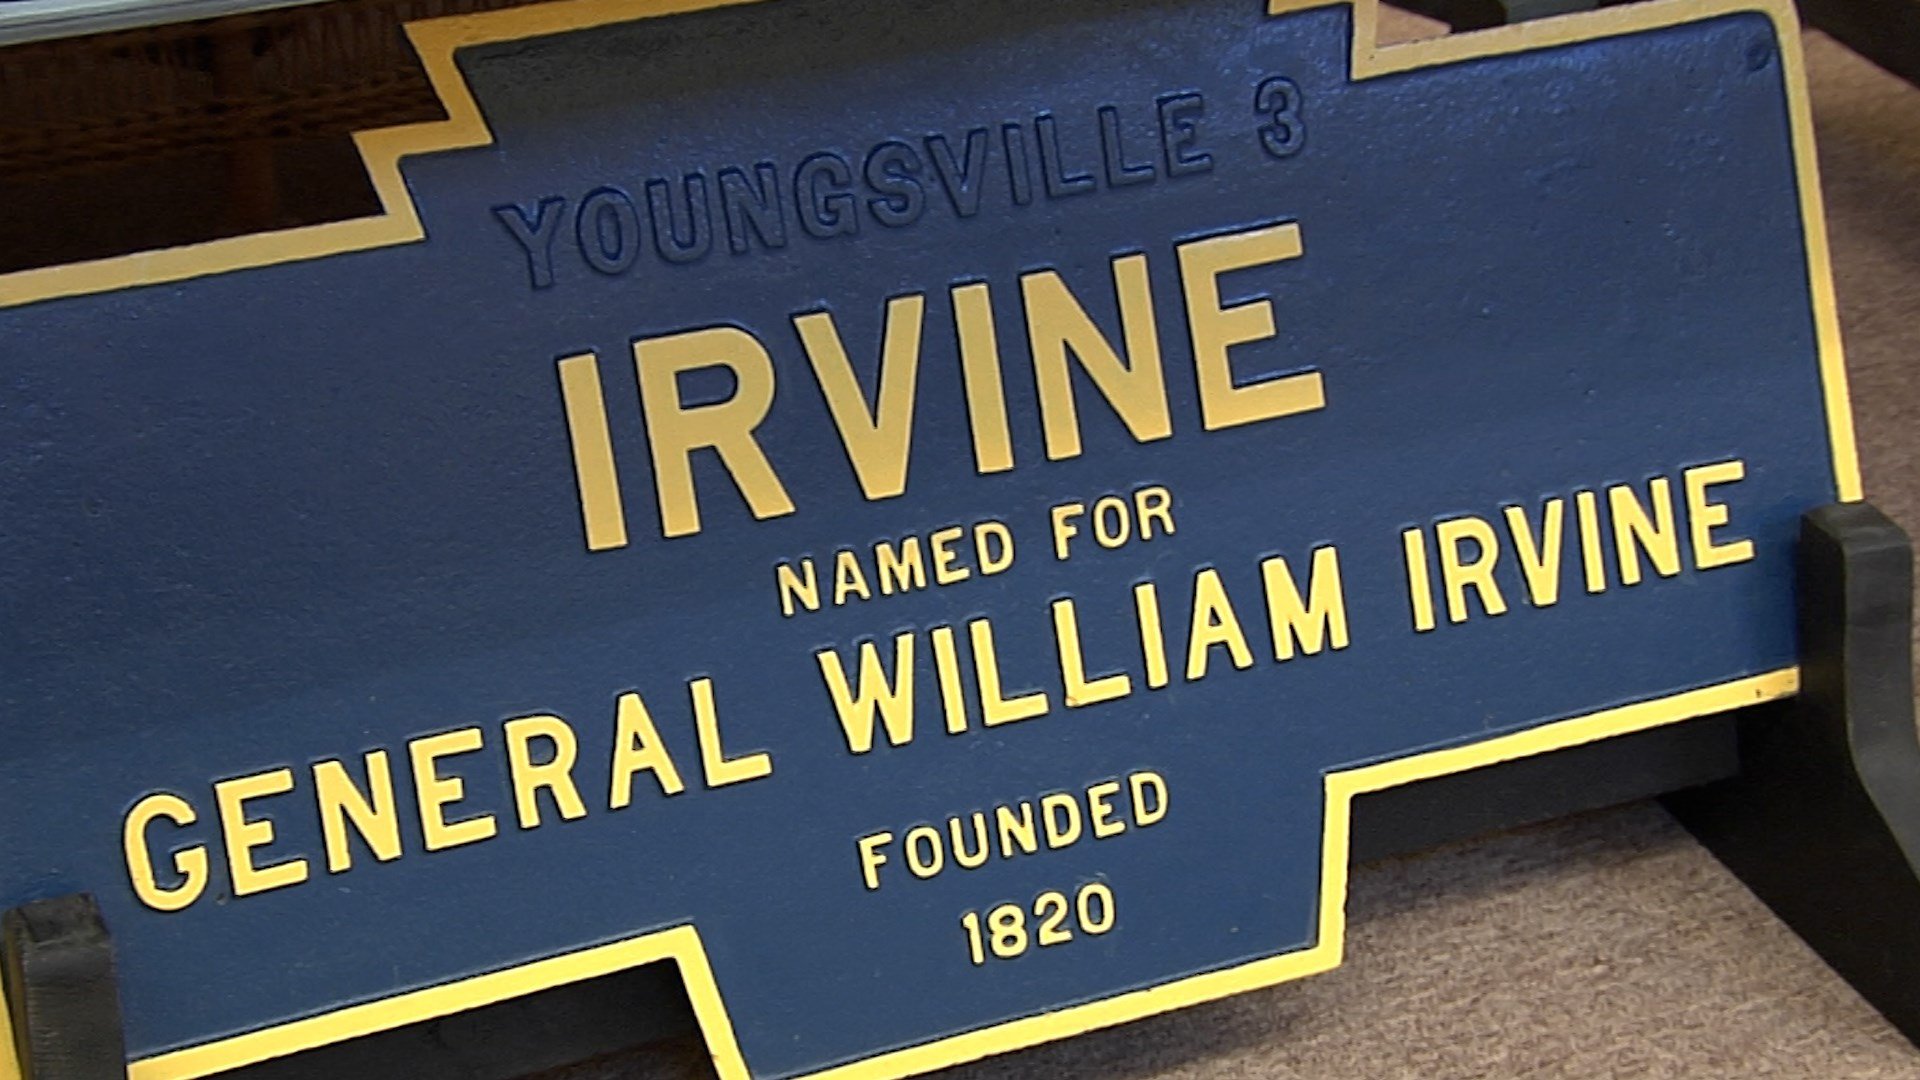 Irvine's History Includes George Washington & Little Church